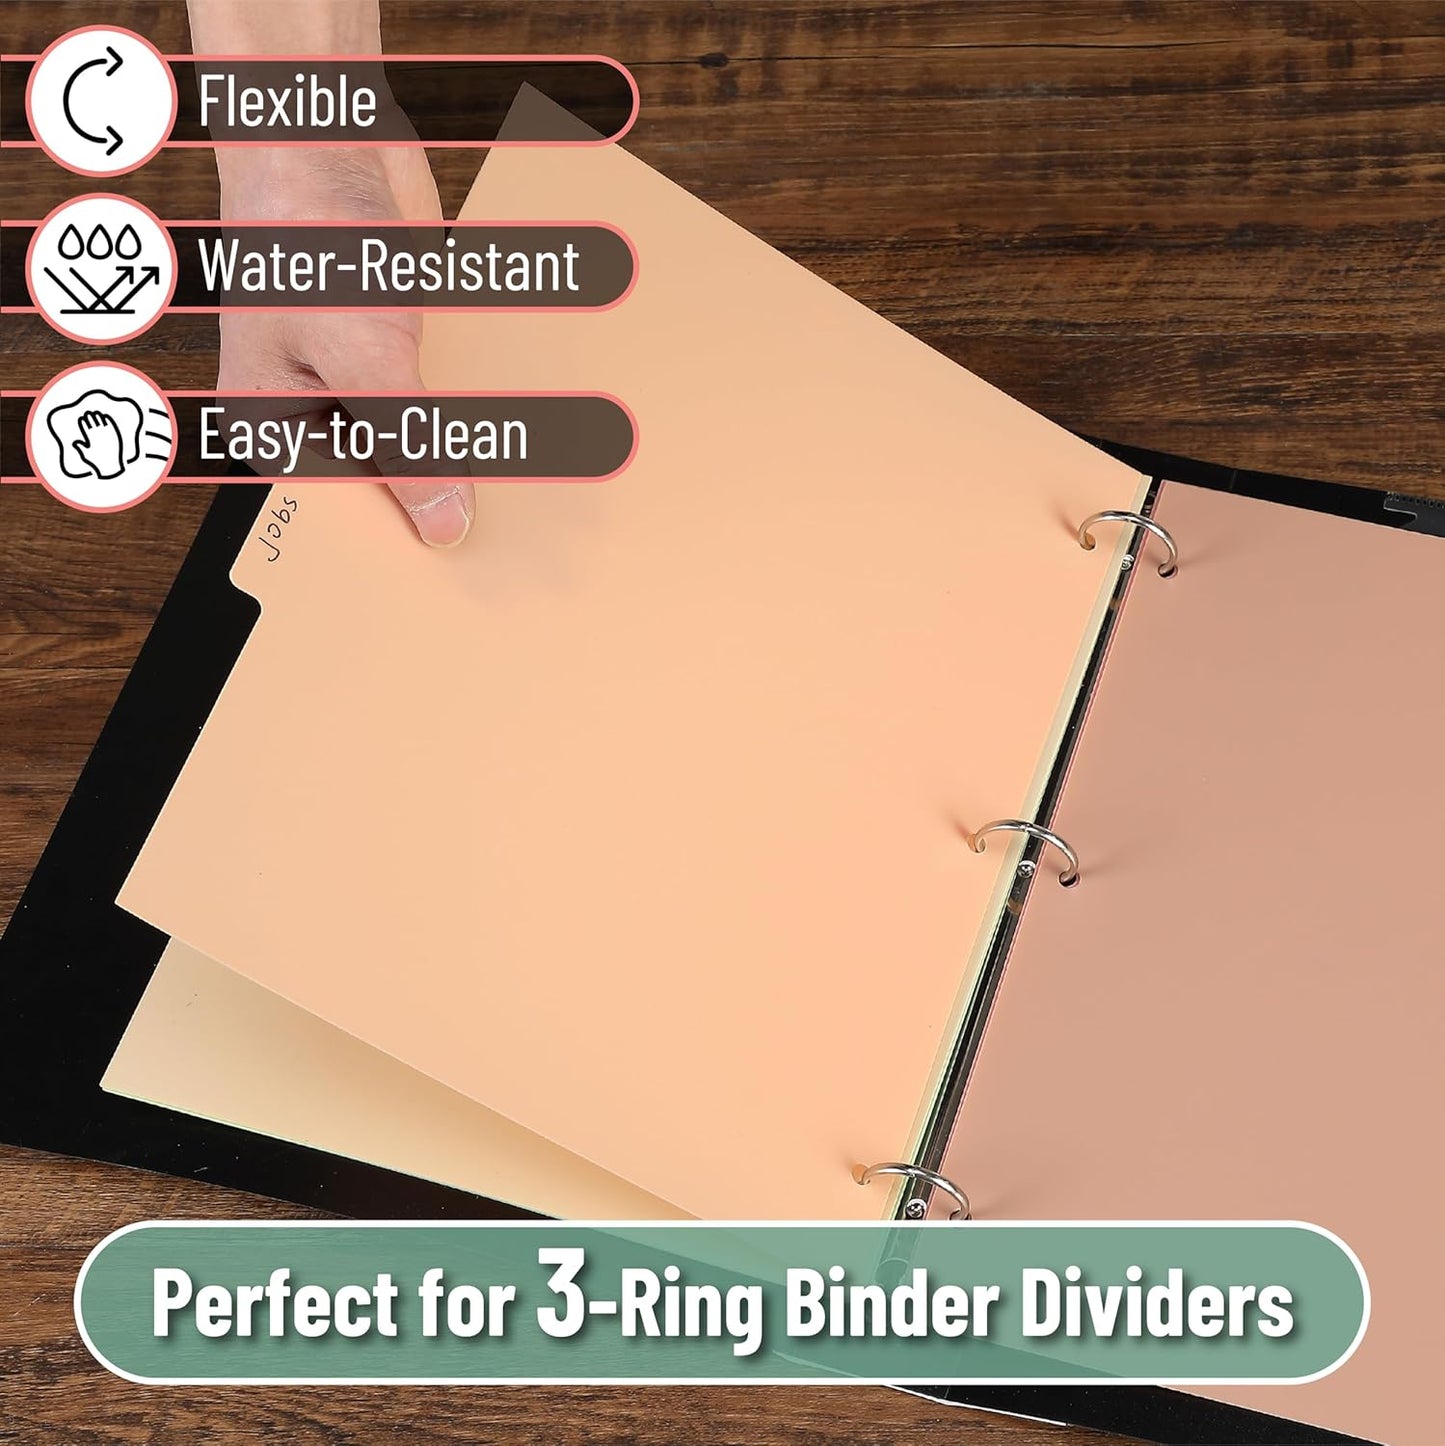 - Binder Dividers, 6 Tab Dividers, Pack of 2 Sets (12 Dividers Total), Dividers, Plastic Dividers for 3 Ring Binder, Binder Dividers with Tabs, Binder Tabs, 3 Ring Binder Dividers